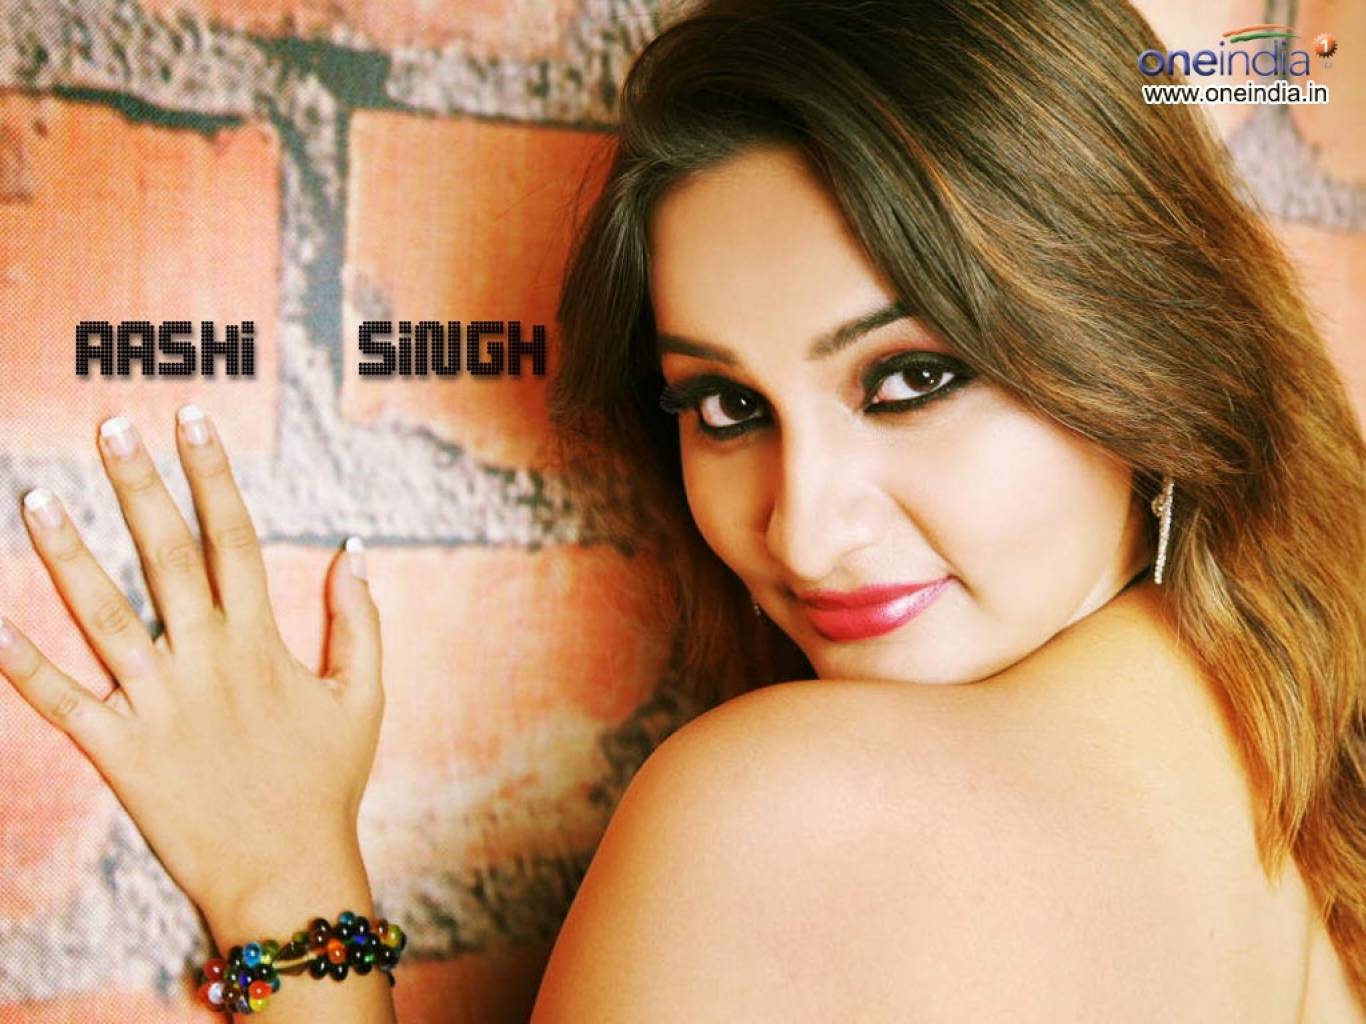 Aashi Singh HD Wallpaper. Latest Aashi Singh Wallpaper HD